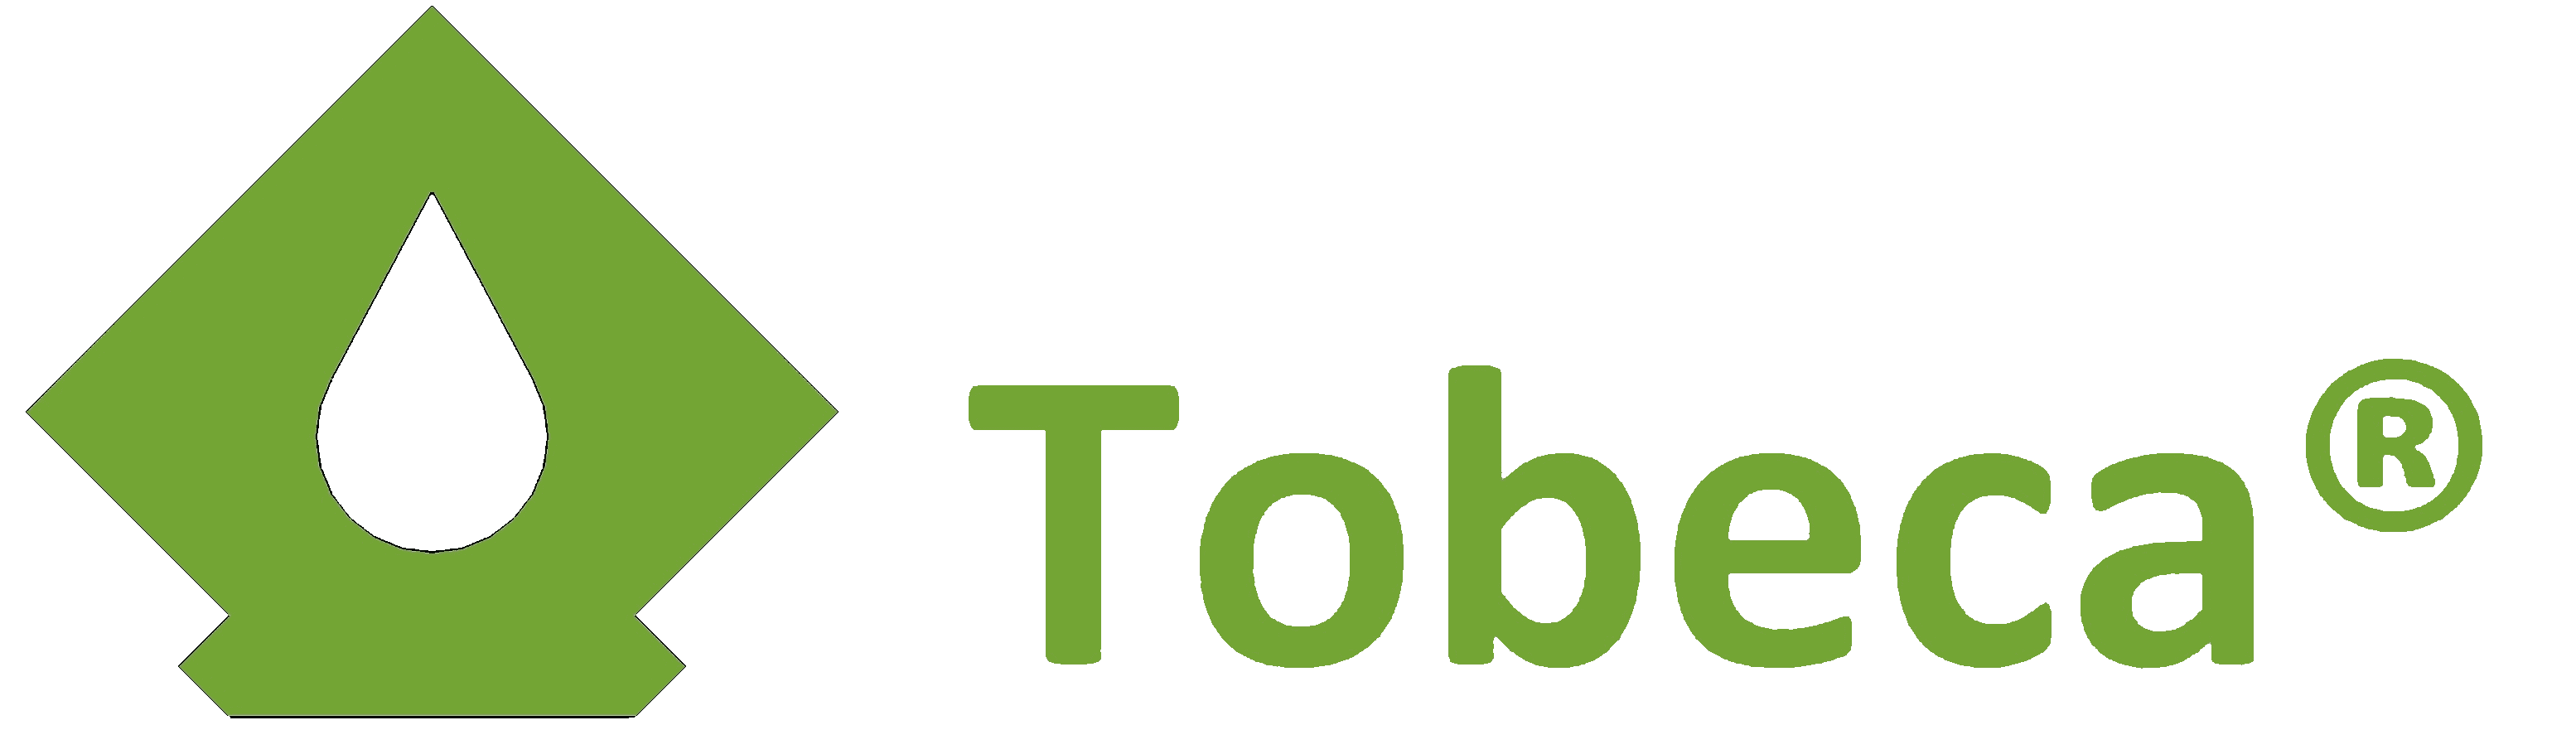 Tobeca logo